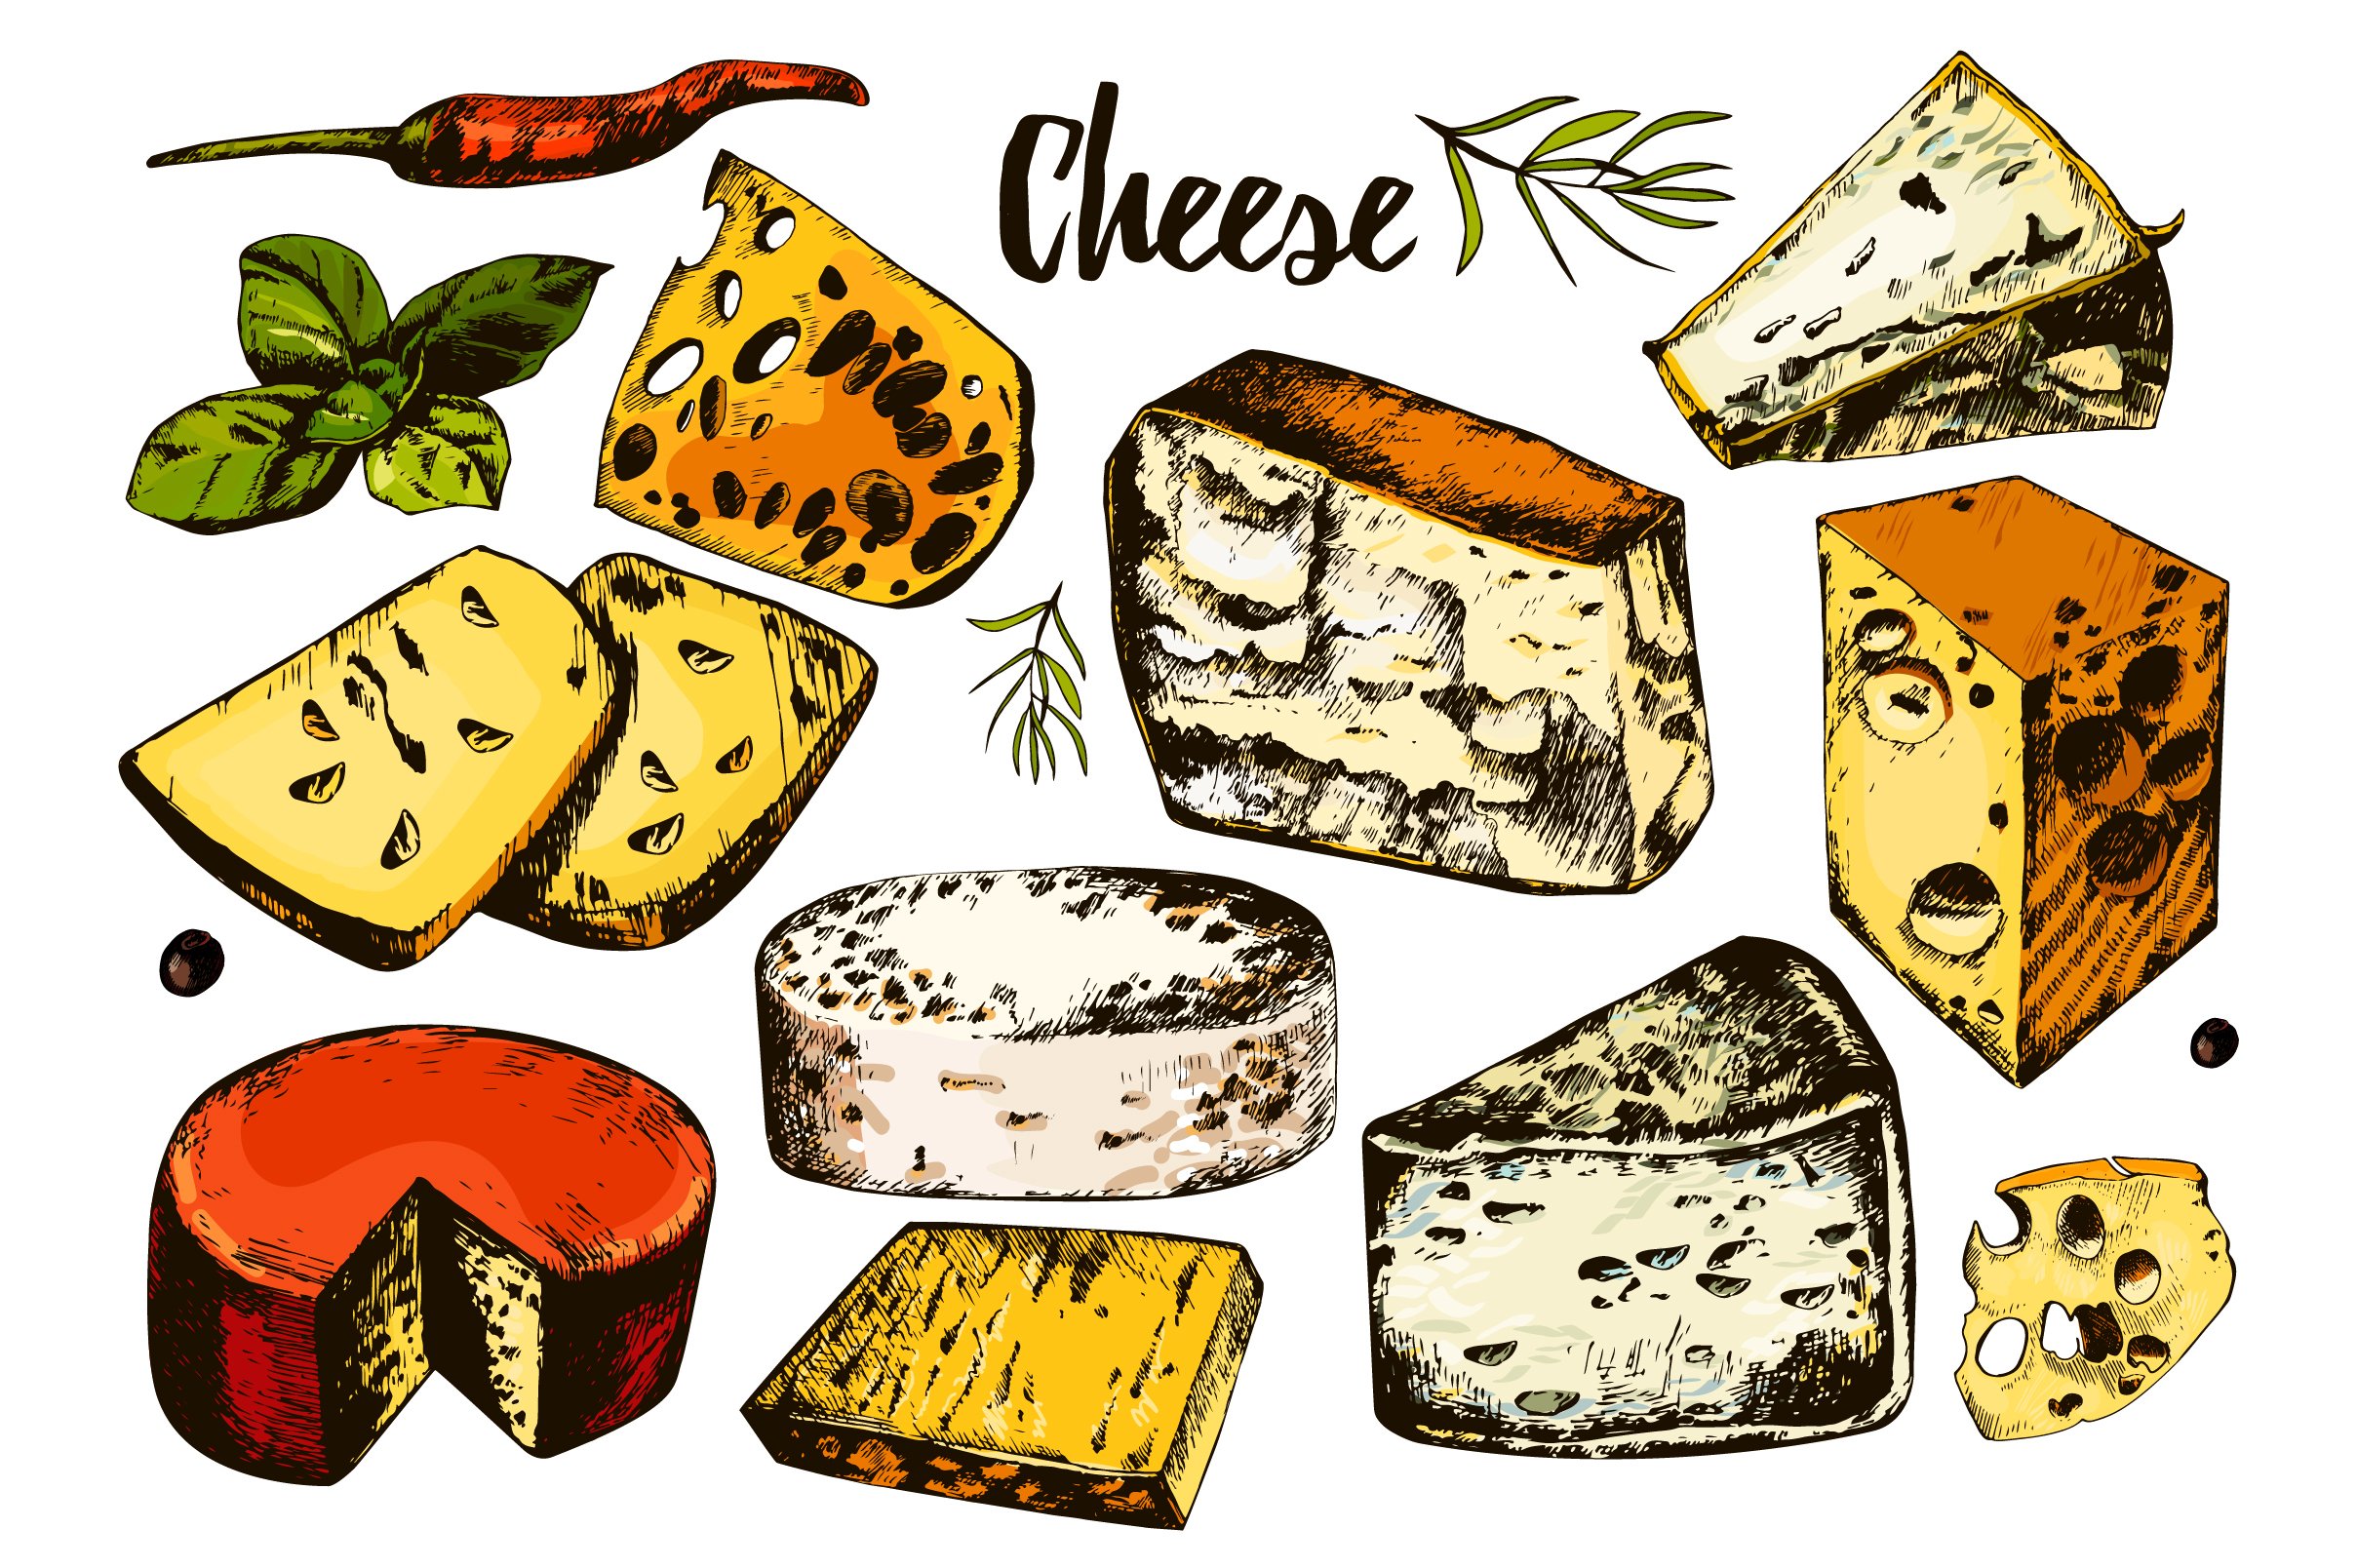 A beautiful image of hard cheese varieties.